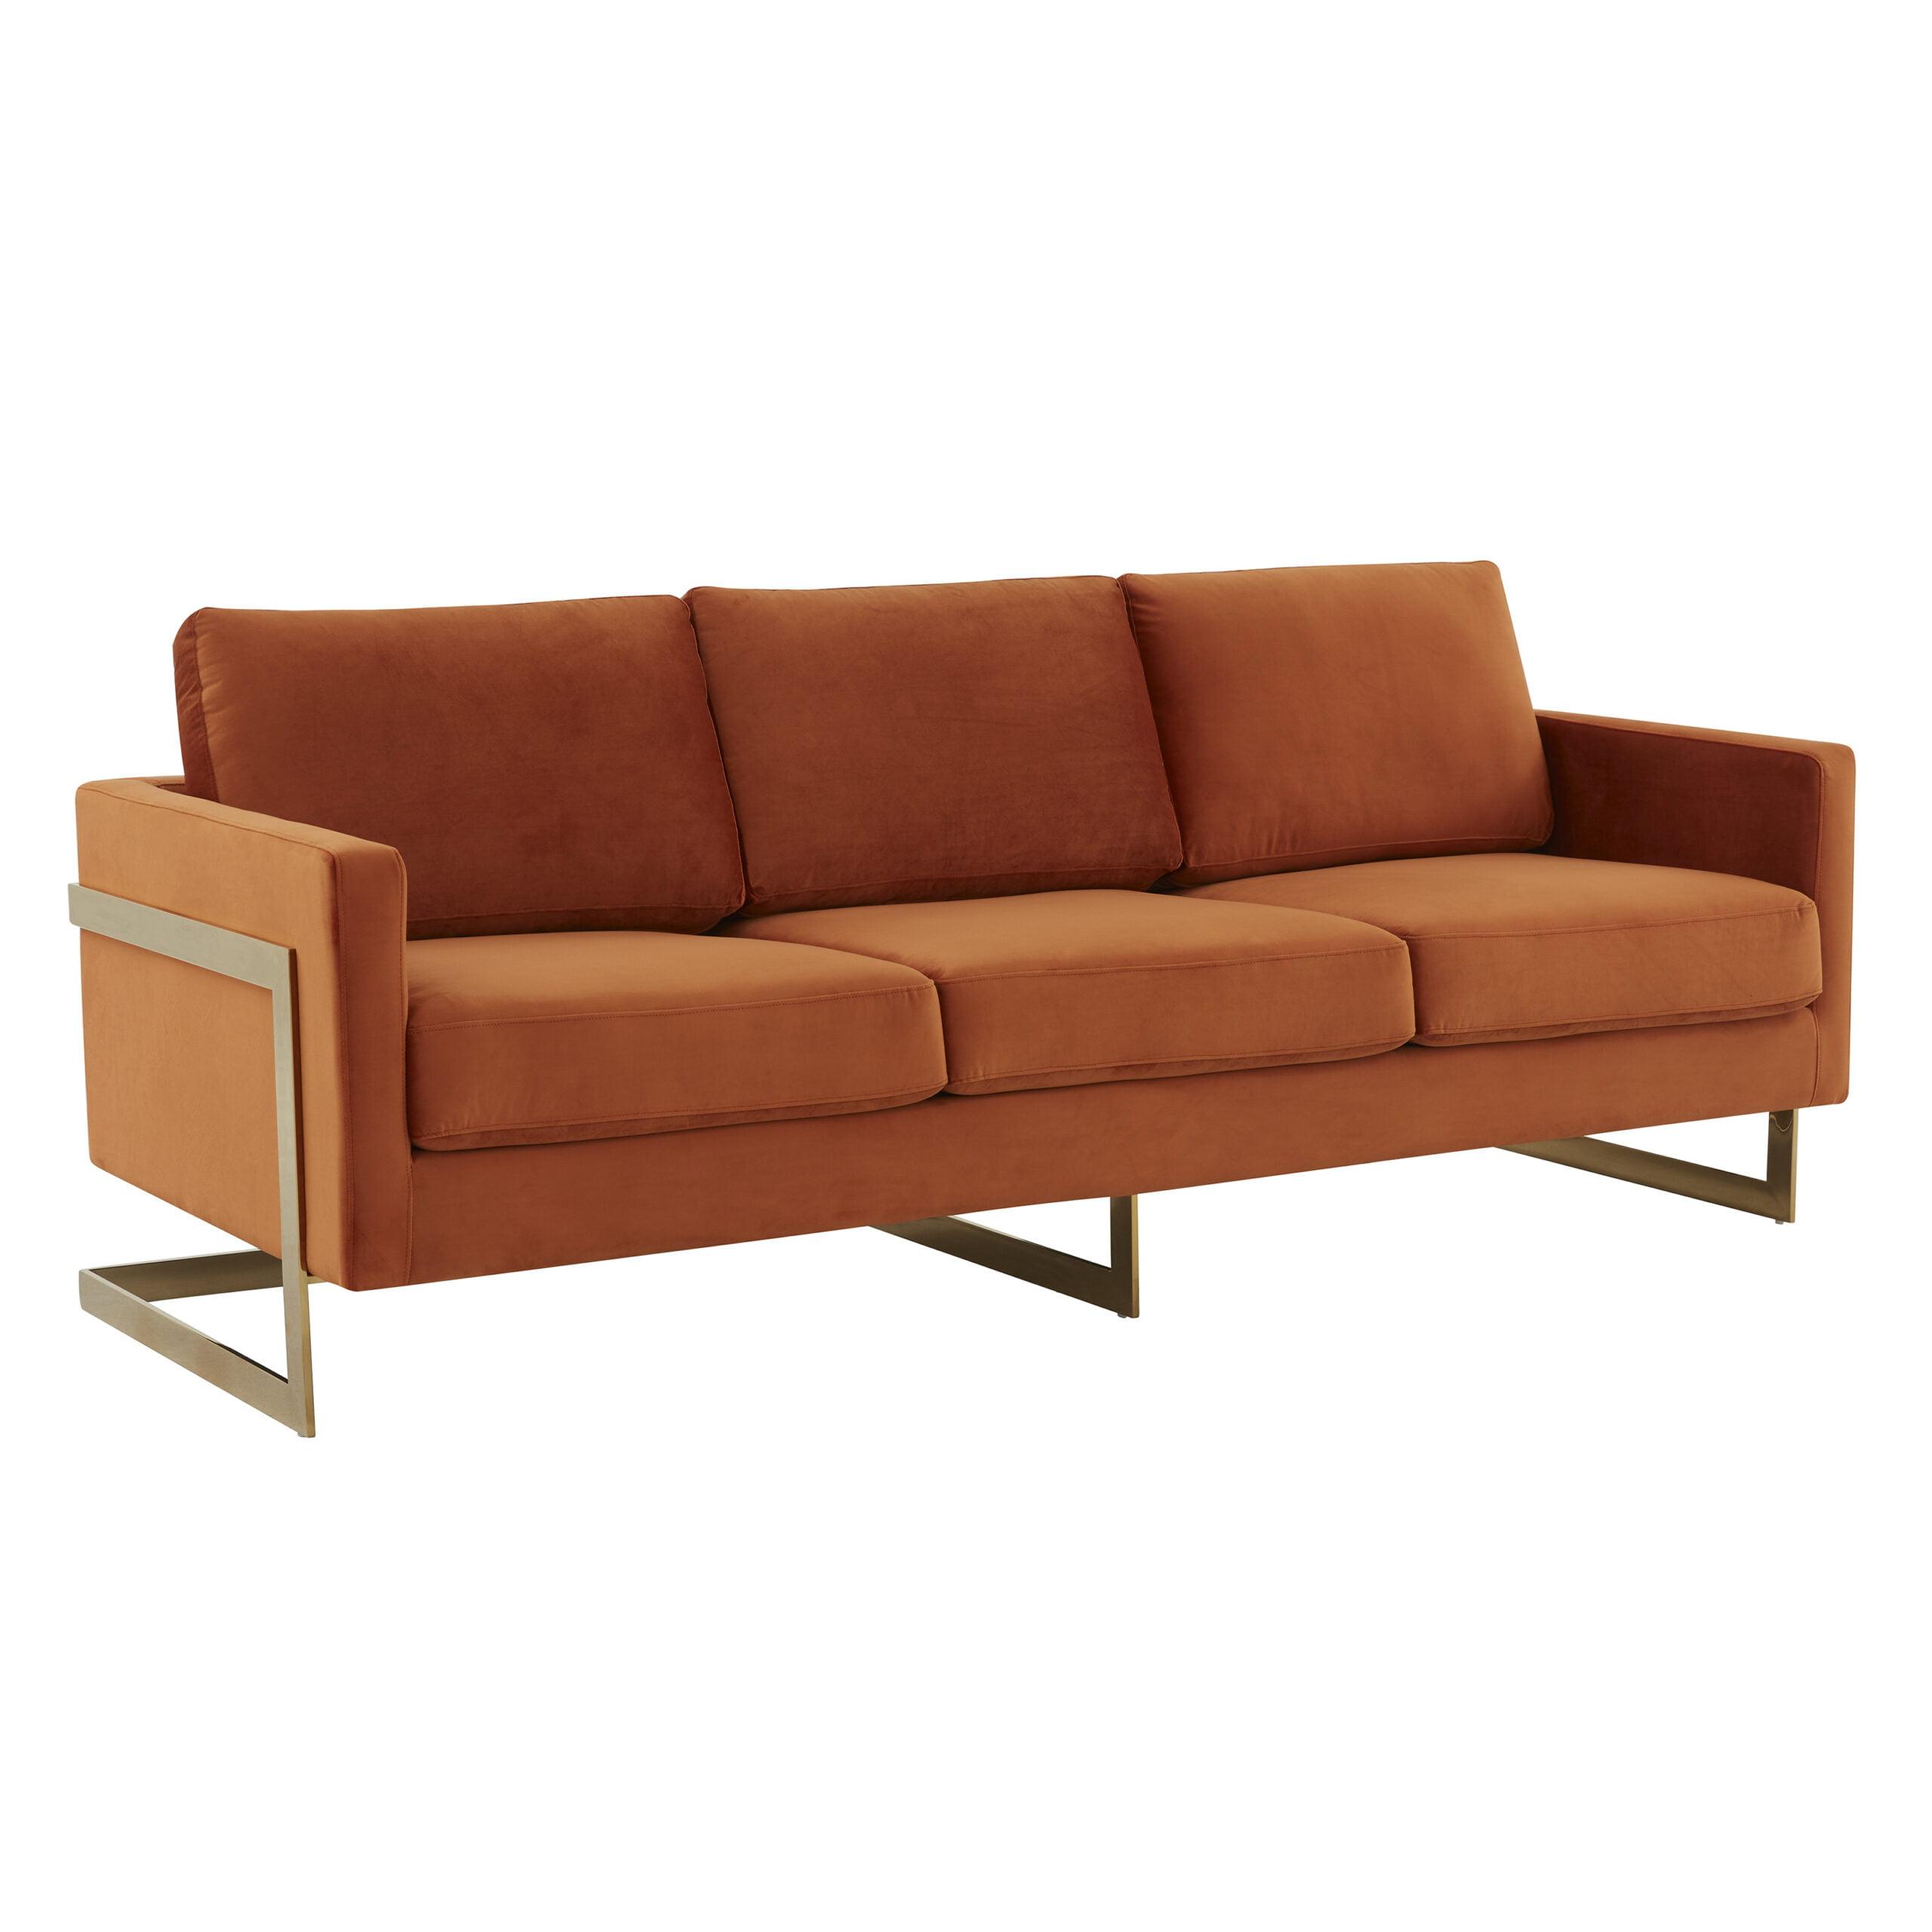 Elegant Velvet & Wood Sofa in Orange Marmalade with Gold Steel Legs